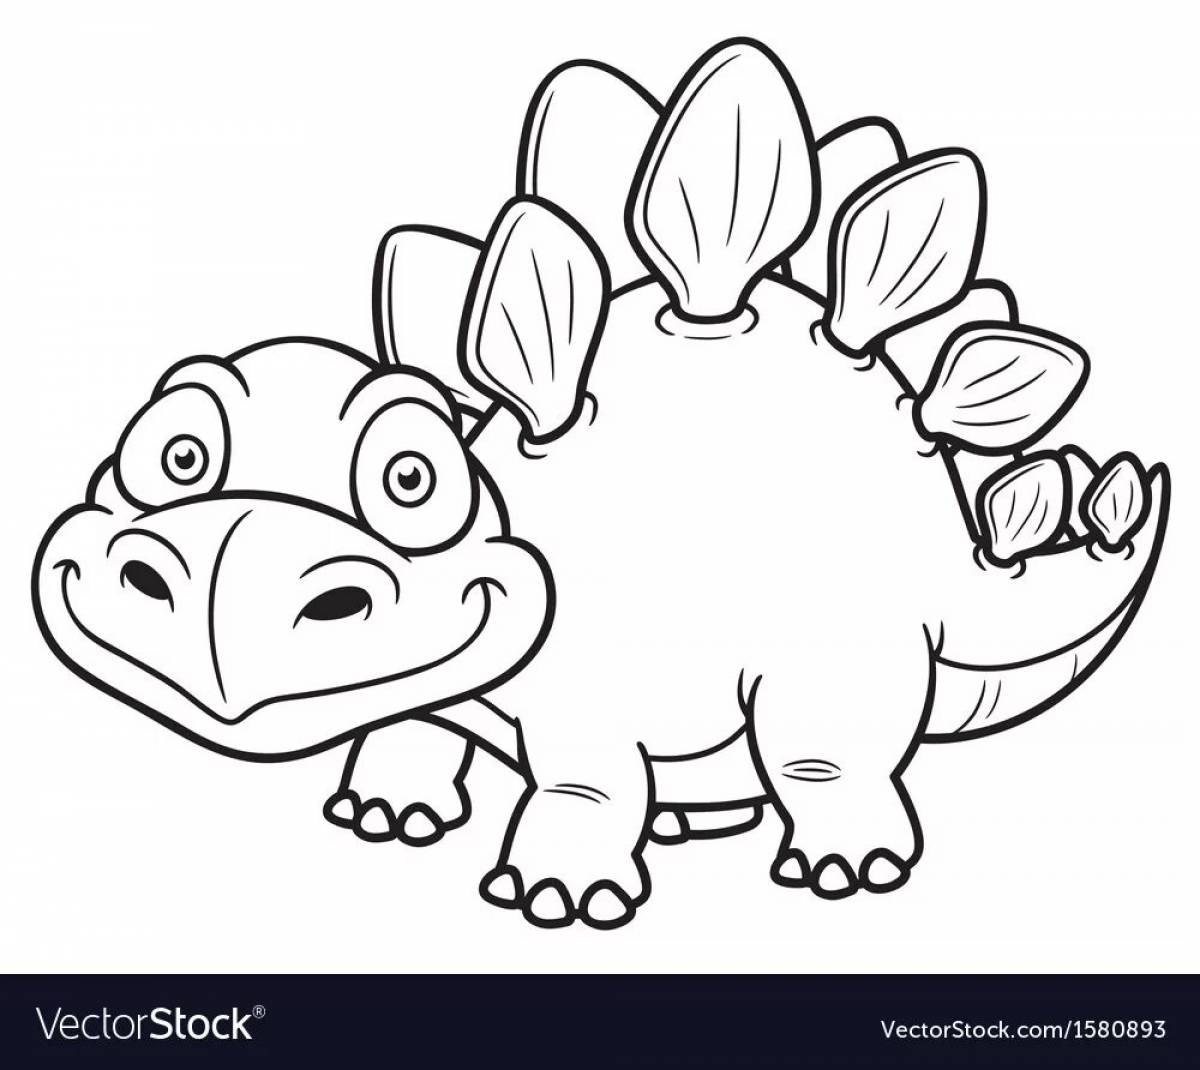 Cartoon dinosaurs #3